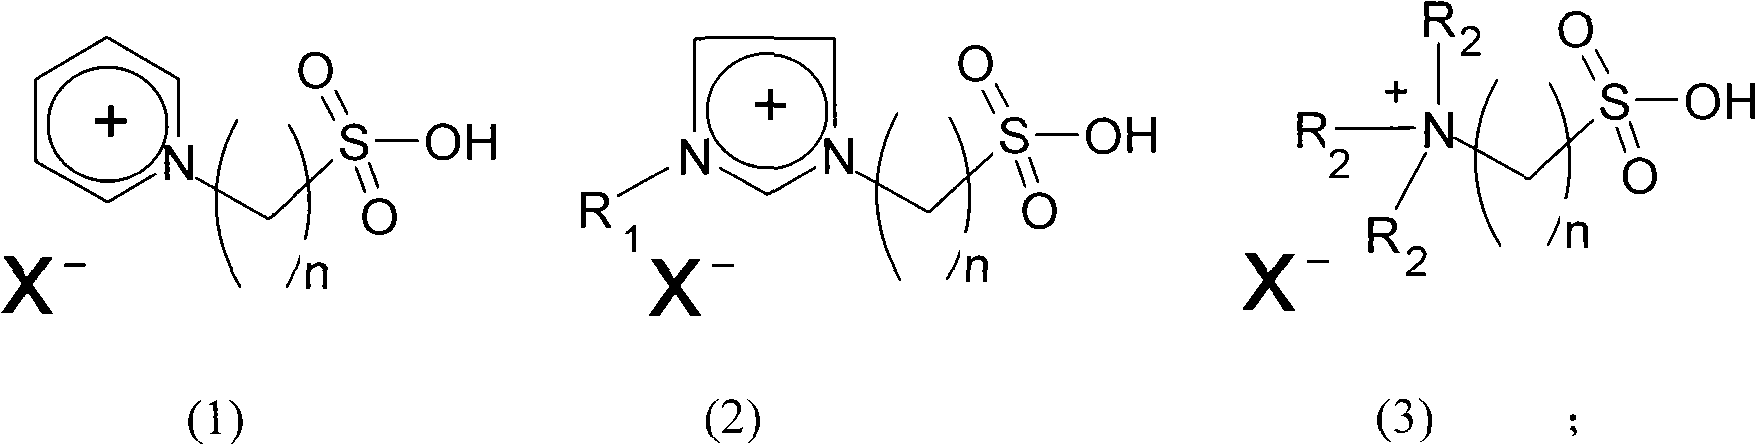 Method for preparing dimeric acid methyl ester